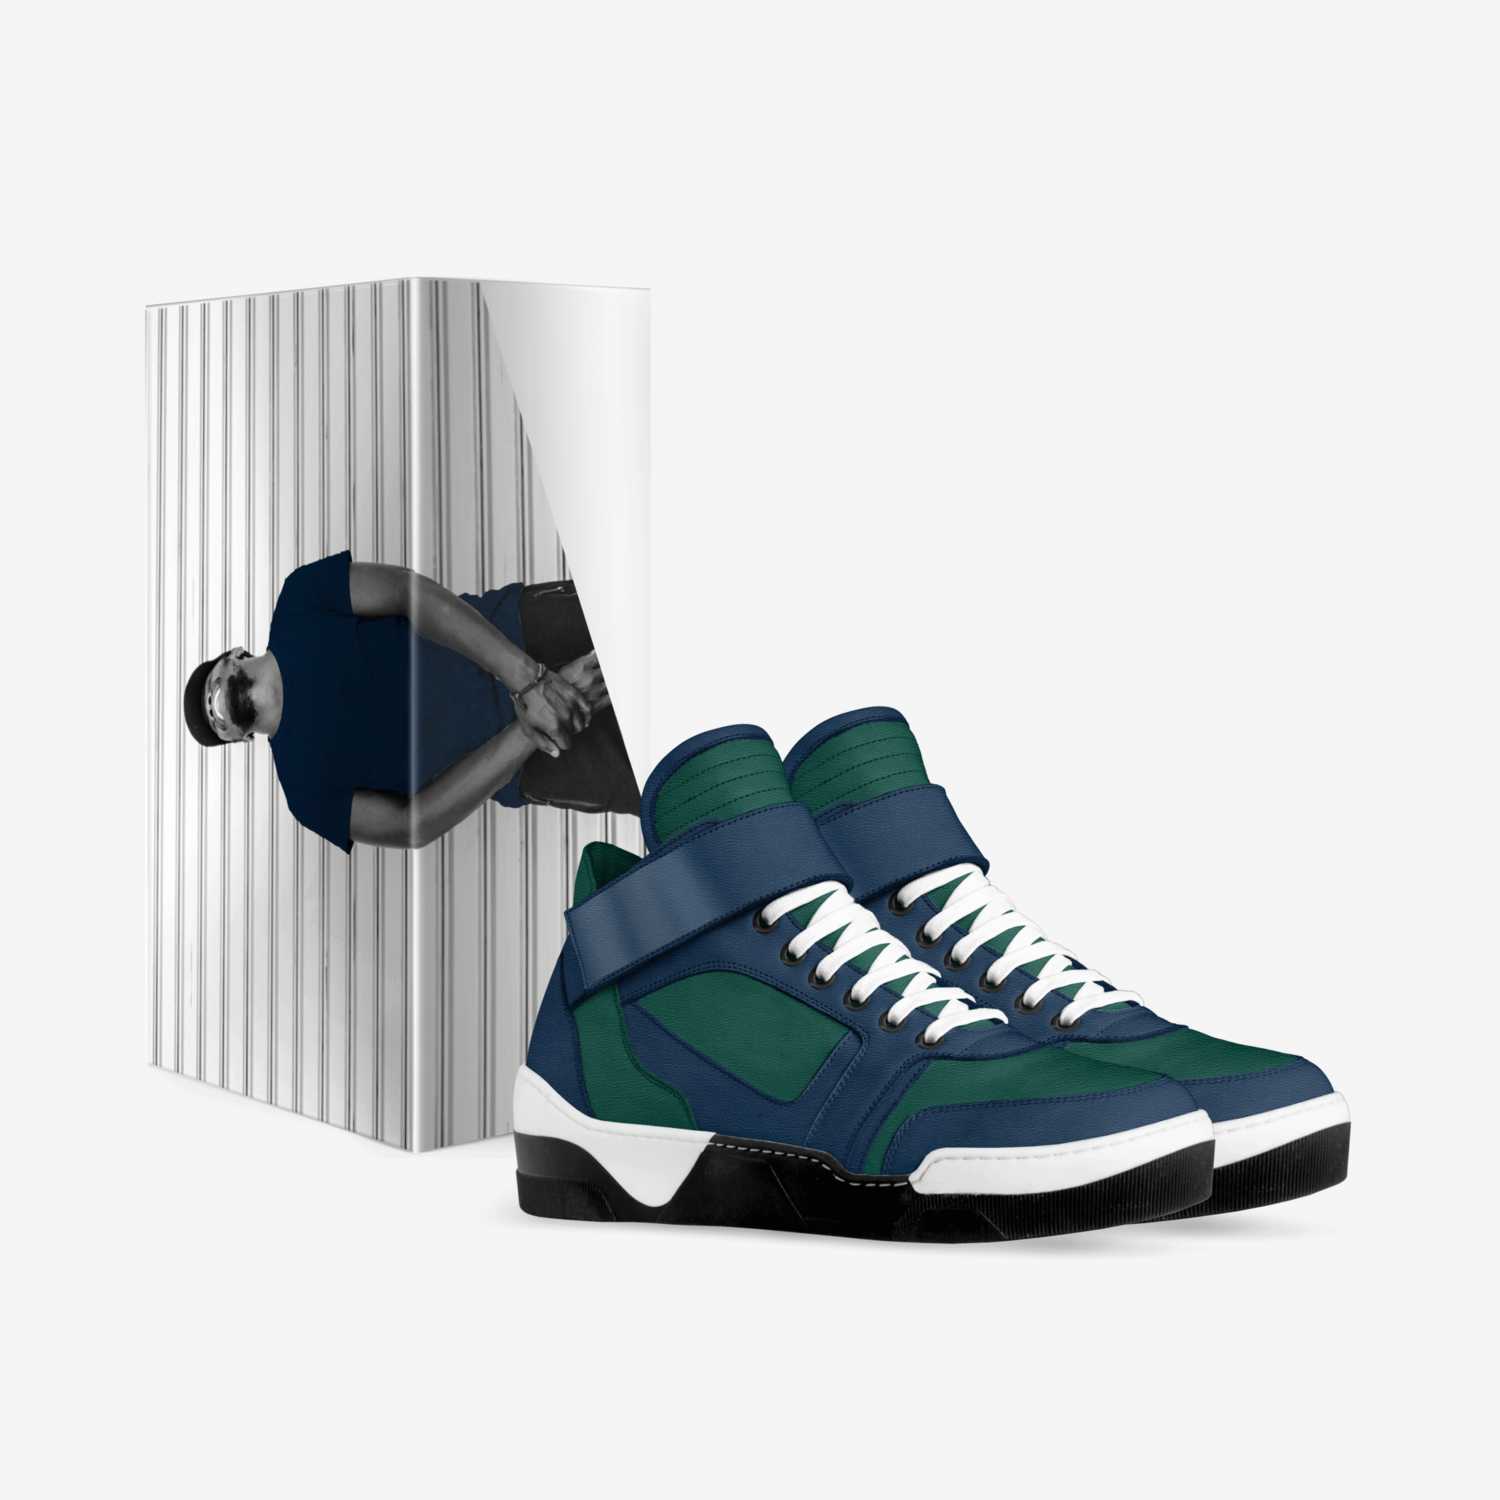 SYCK KYCKS custom made in Italy shoes by Martin York | Box view